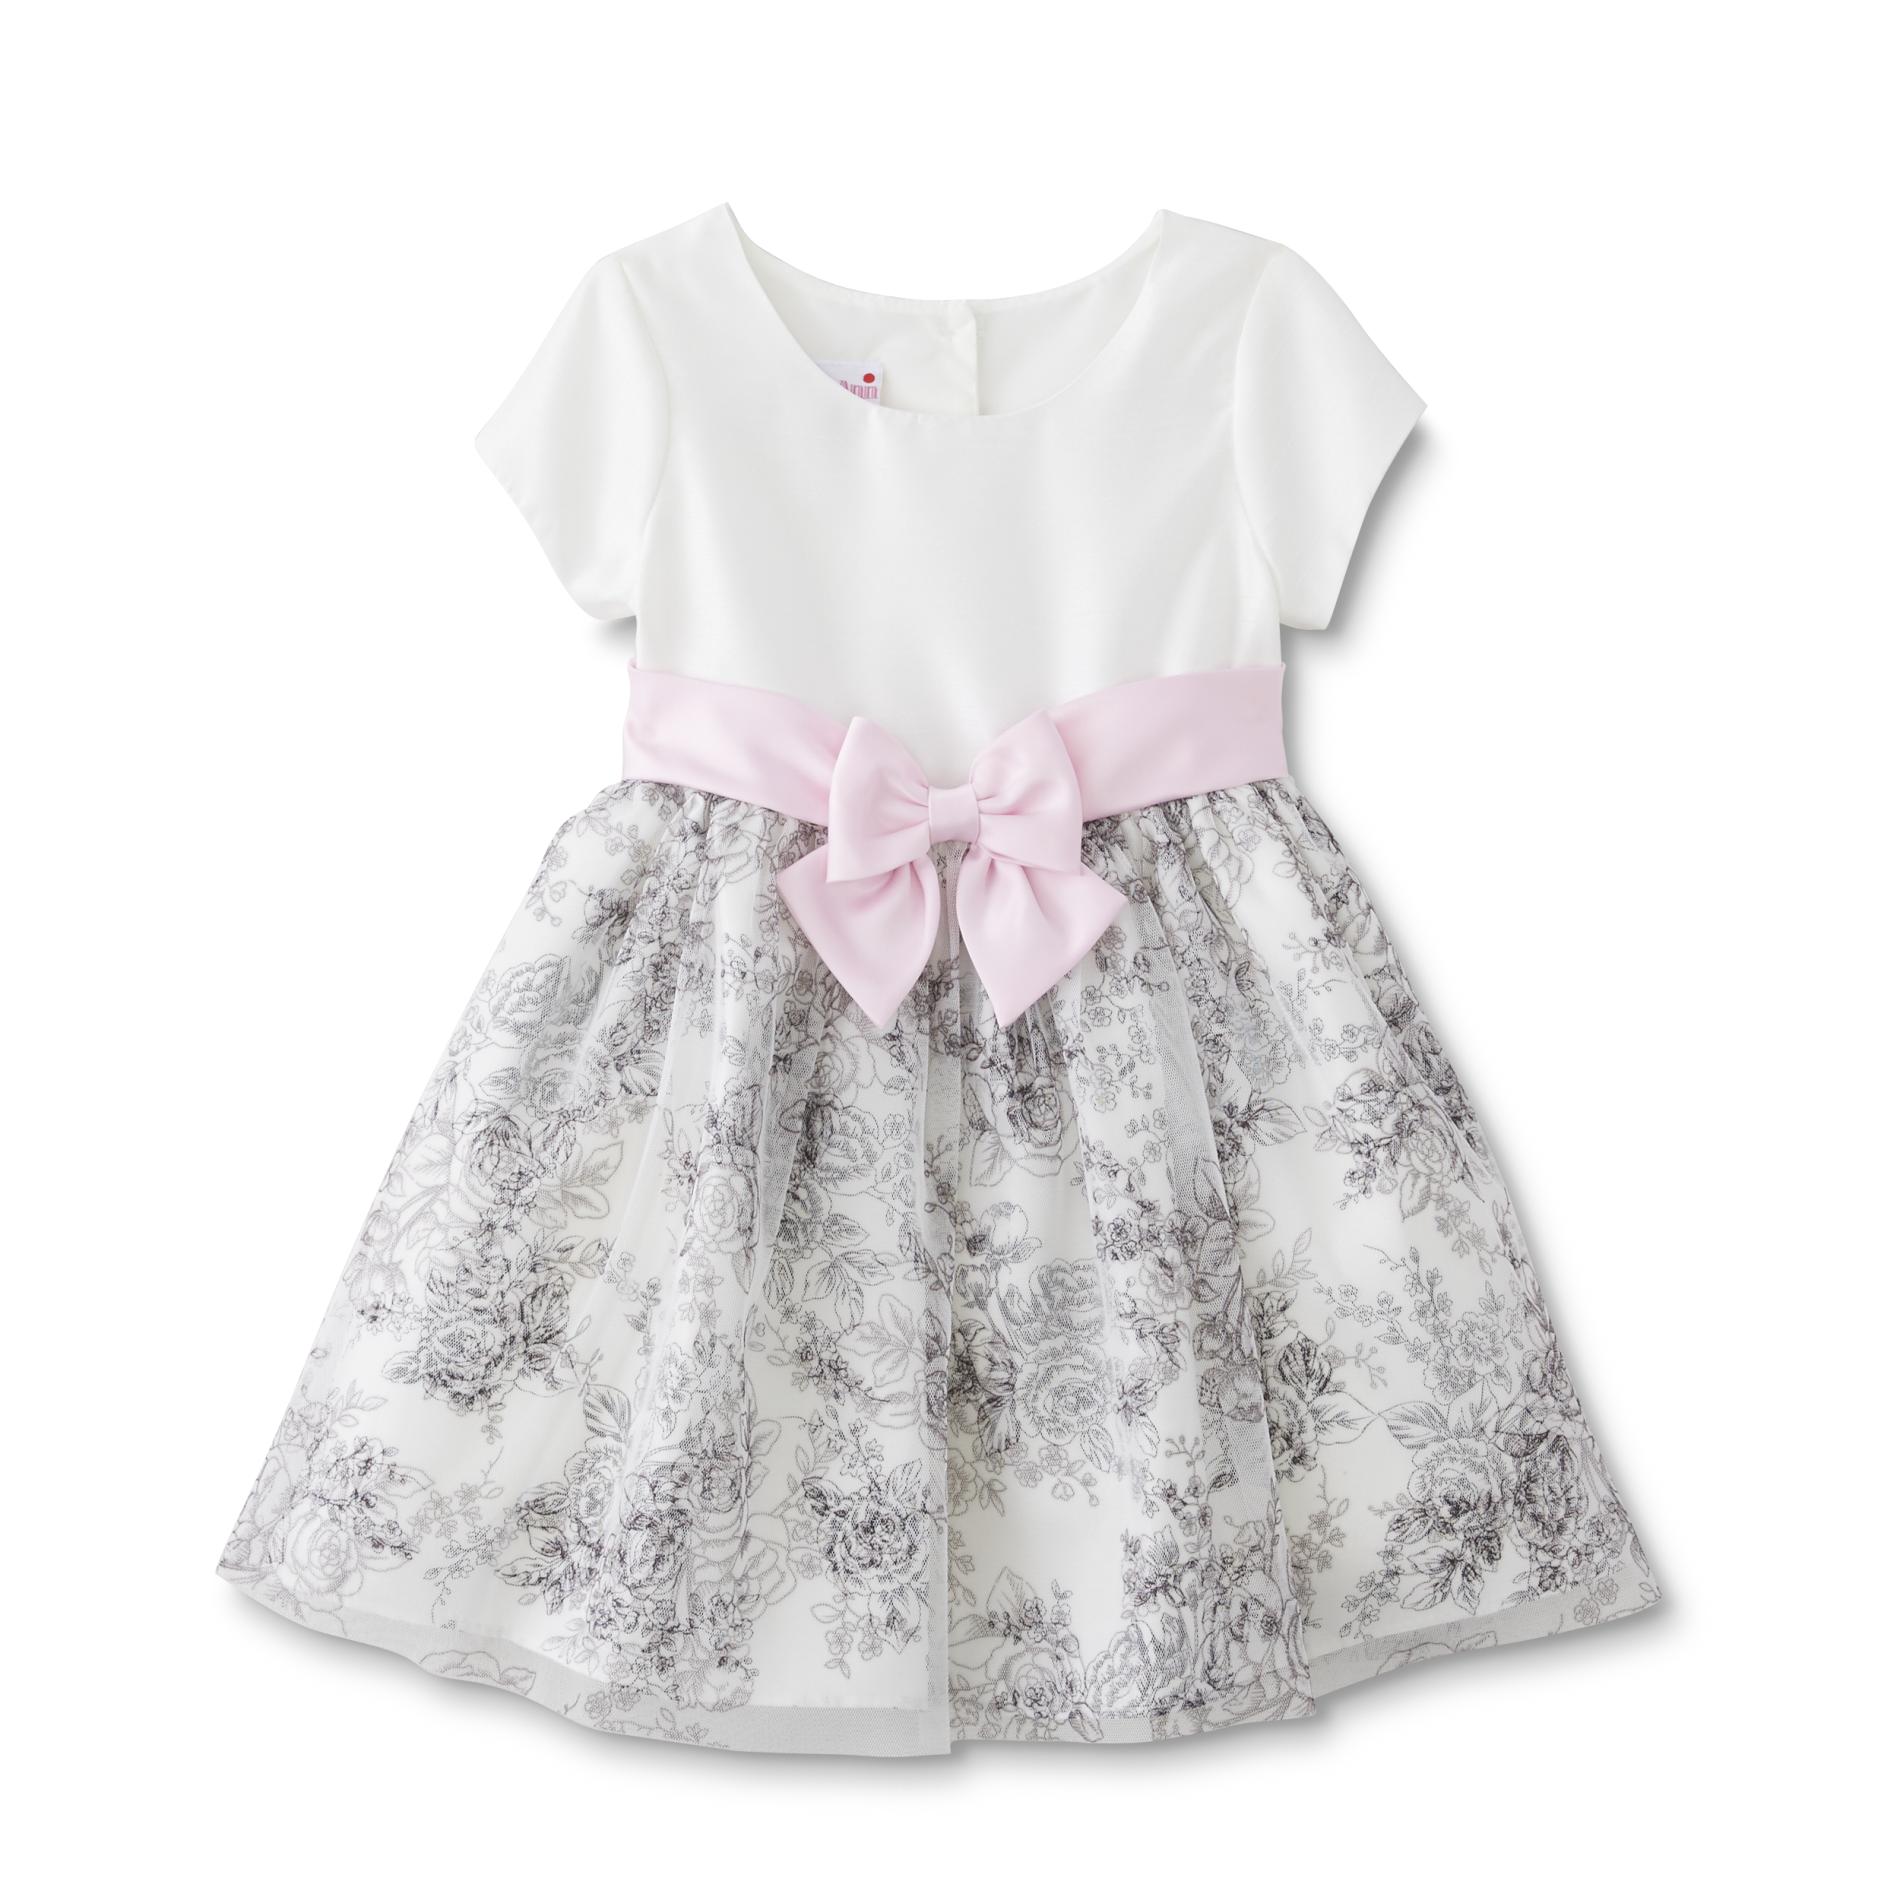 Ashley Ann Infant & Toddler Girls' Party Dress - Floral